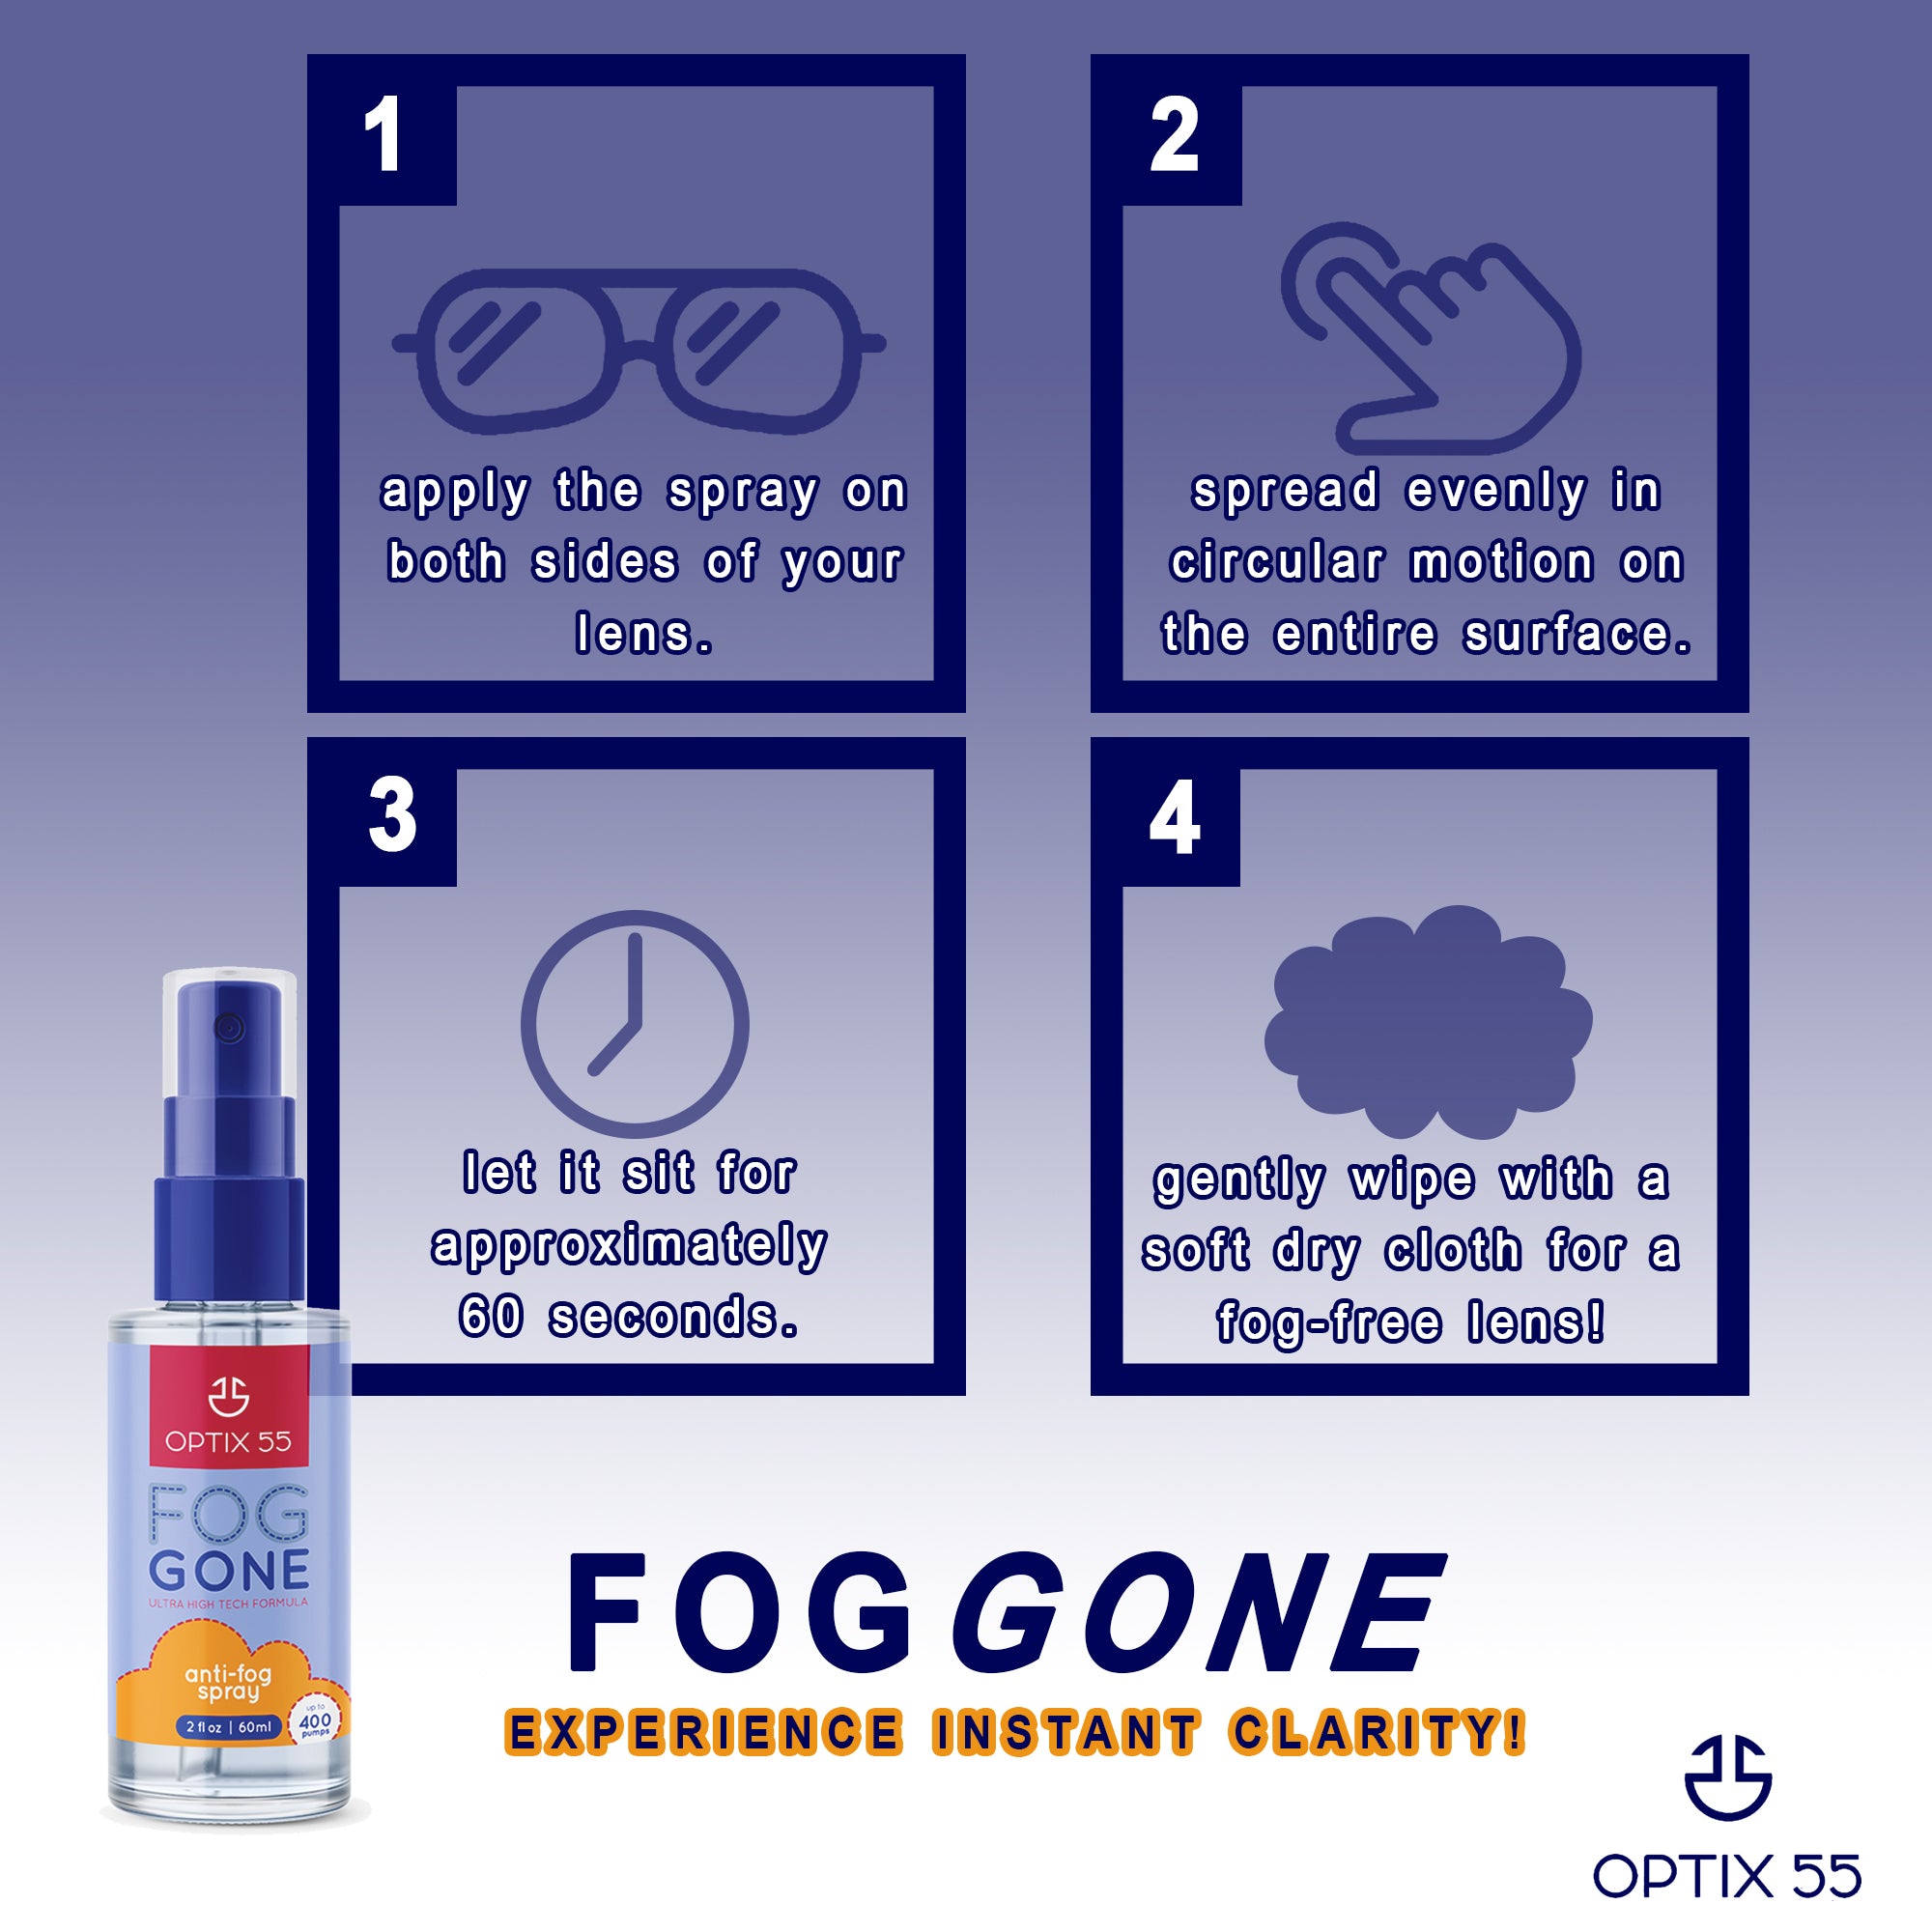 KeySmart FogBlock Anti Fog Eyeglasses Solution Pack Of 5 - Office Depot